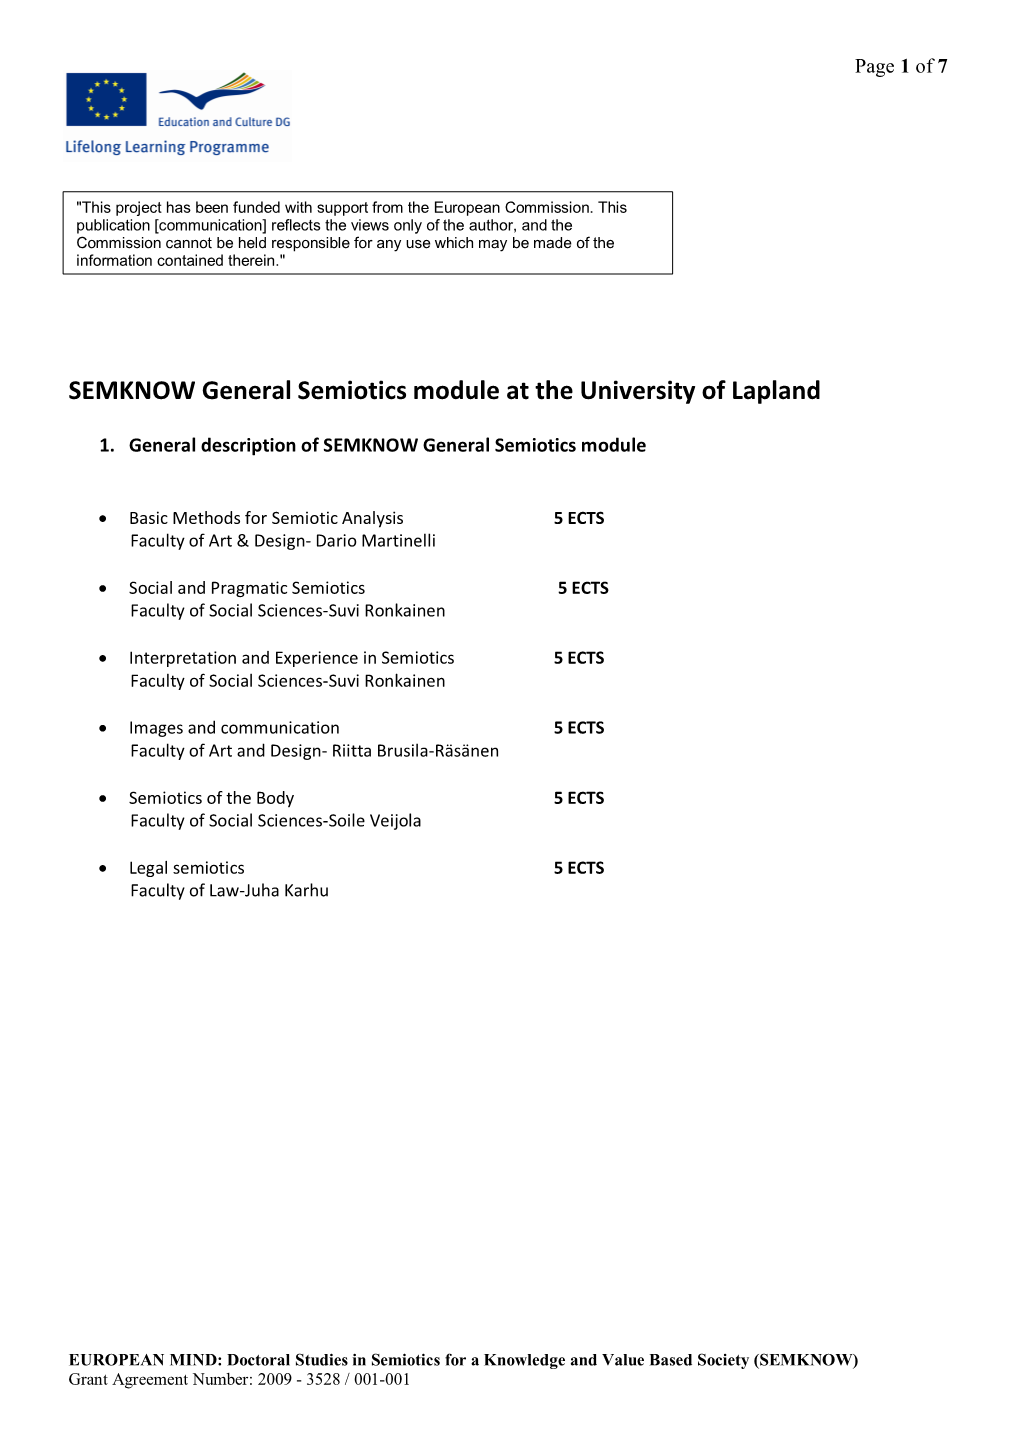 SEMKNOW General Semiotics Module at the University of Lapland